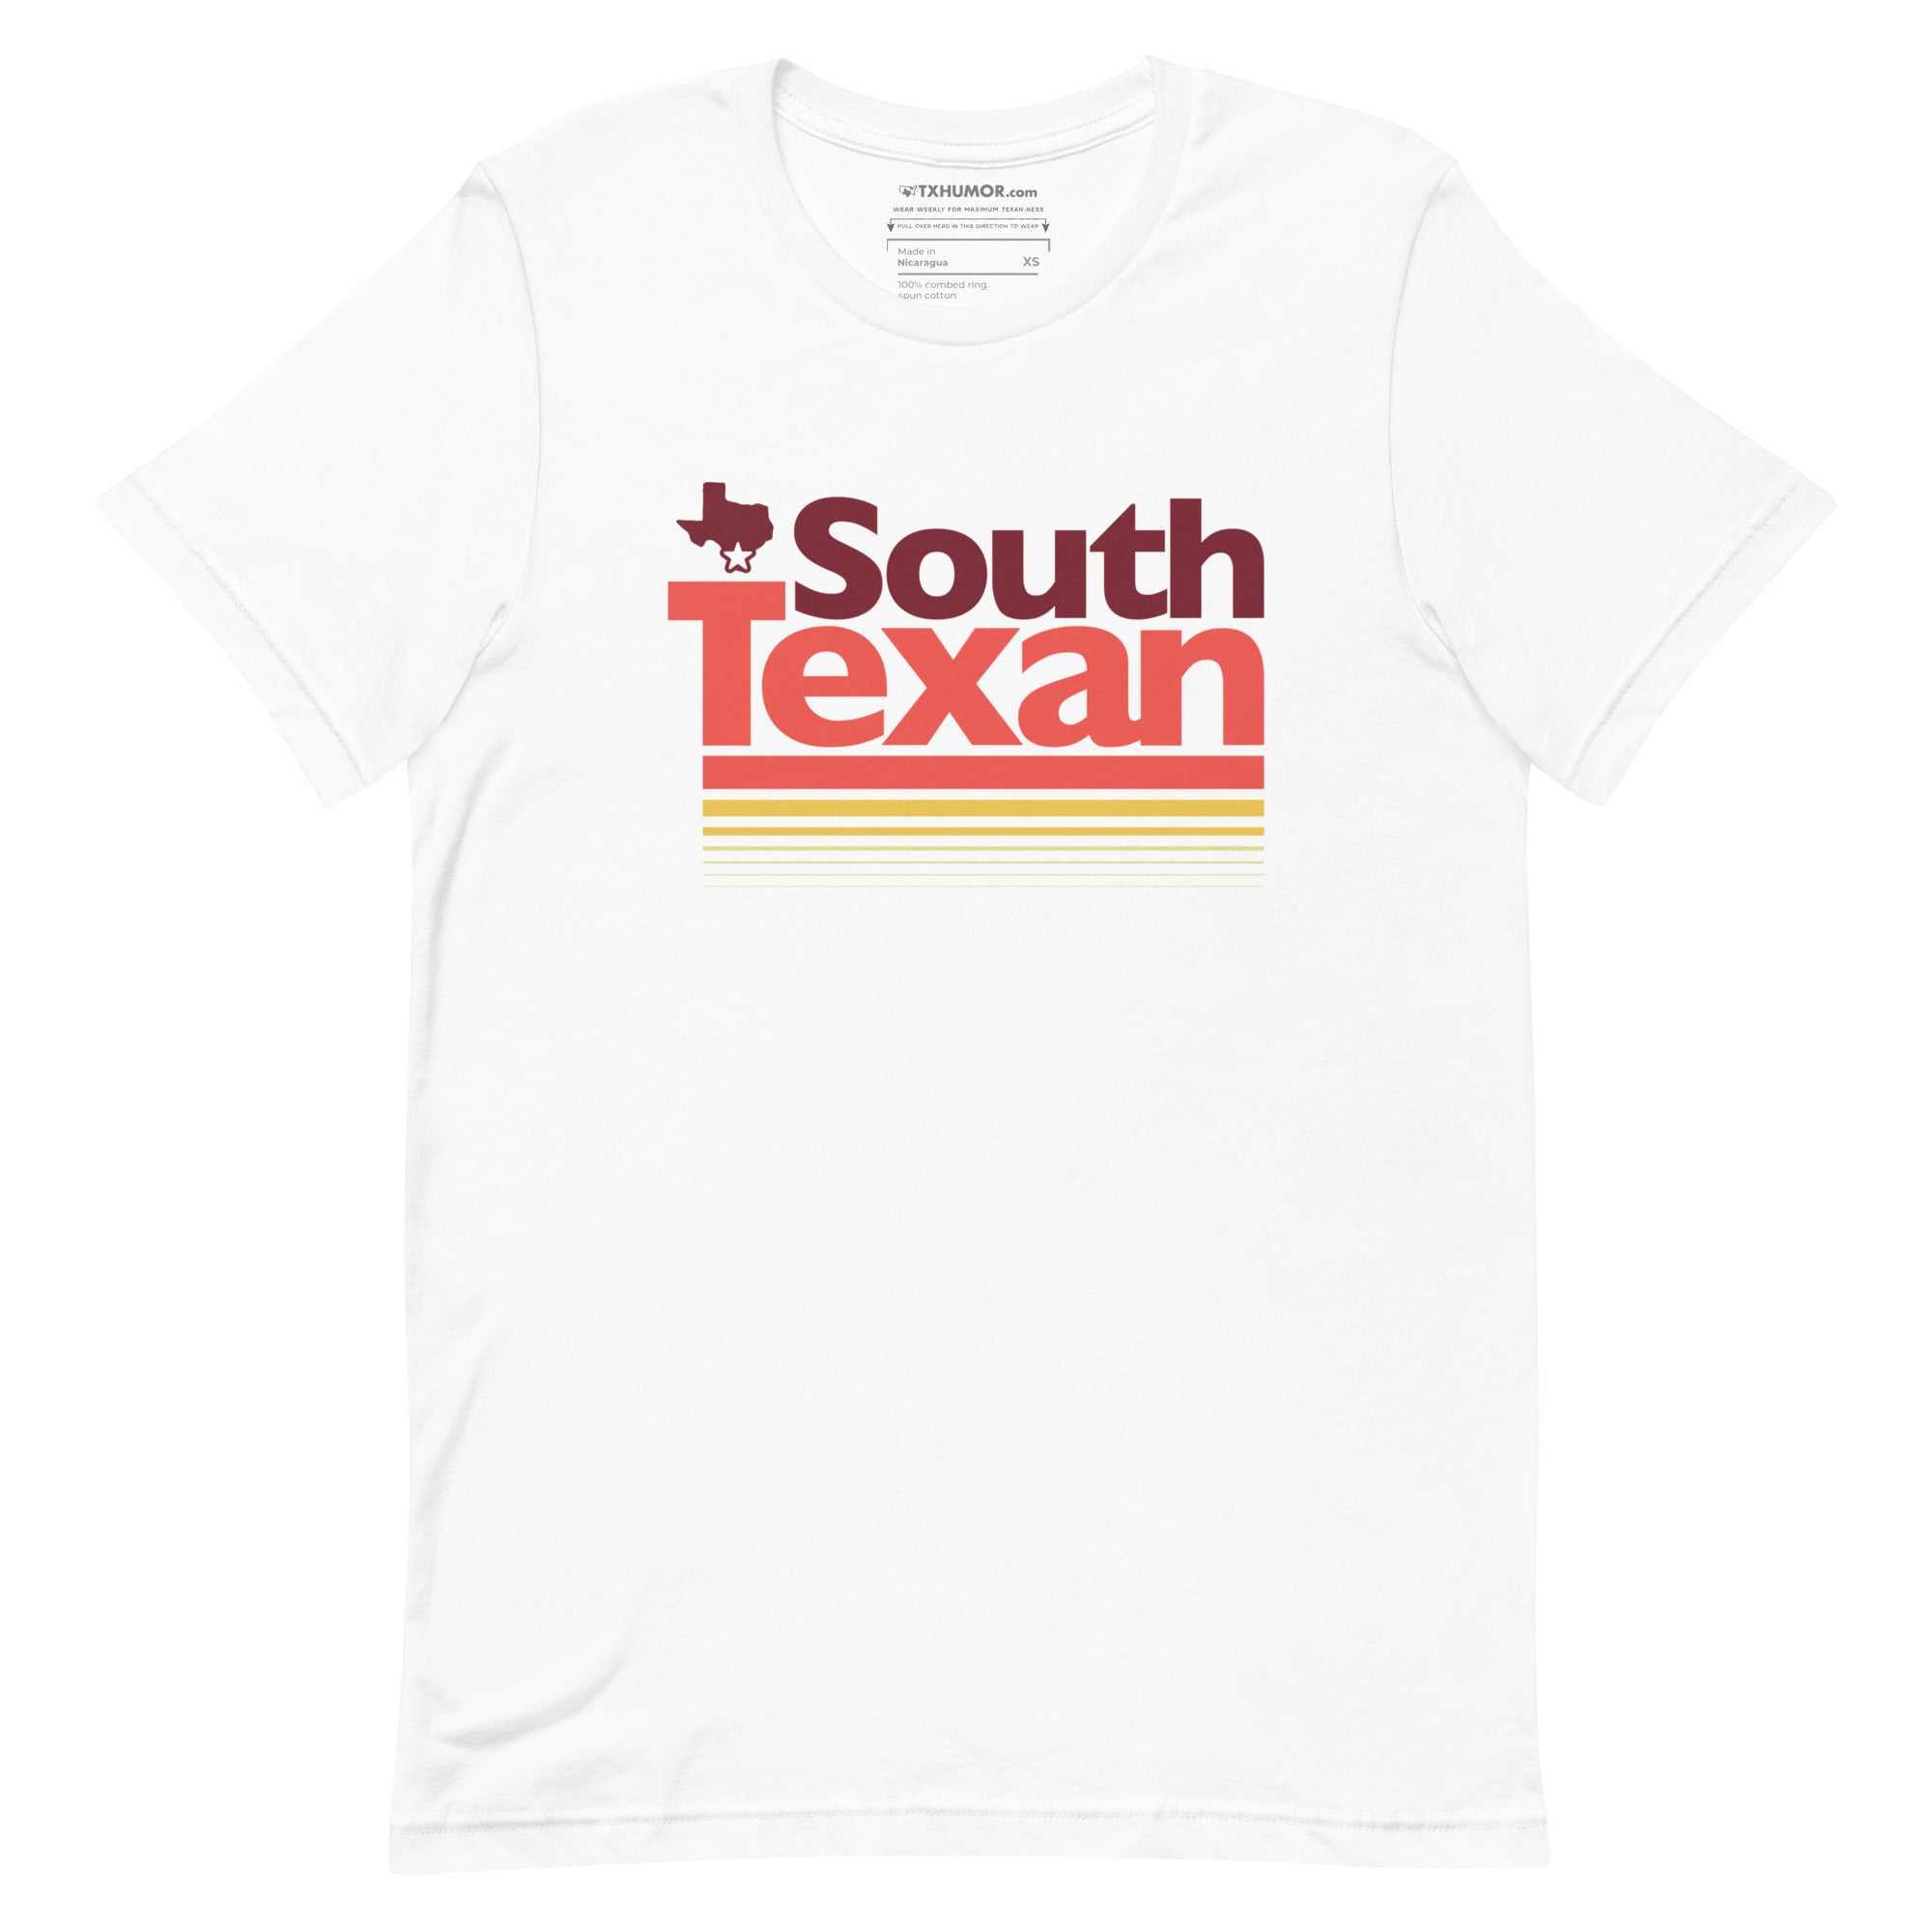 South Texan T-shirt